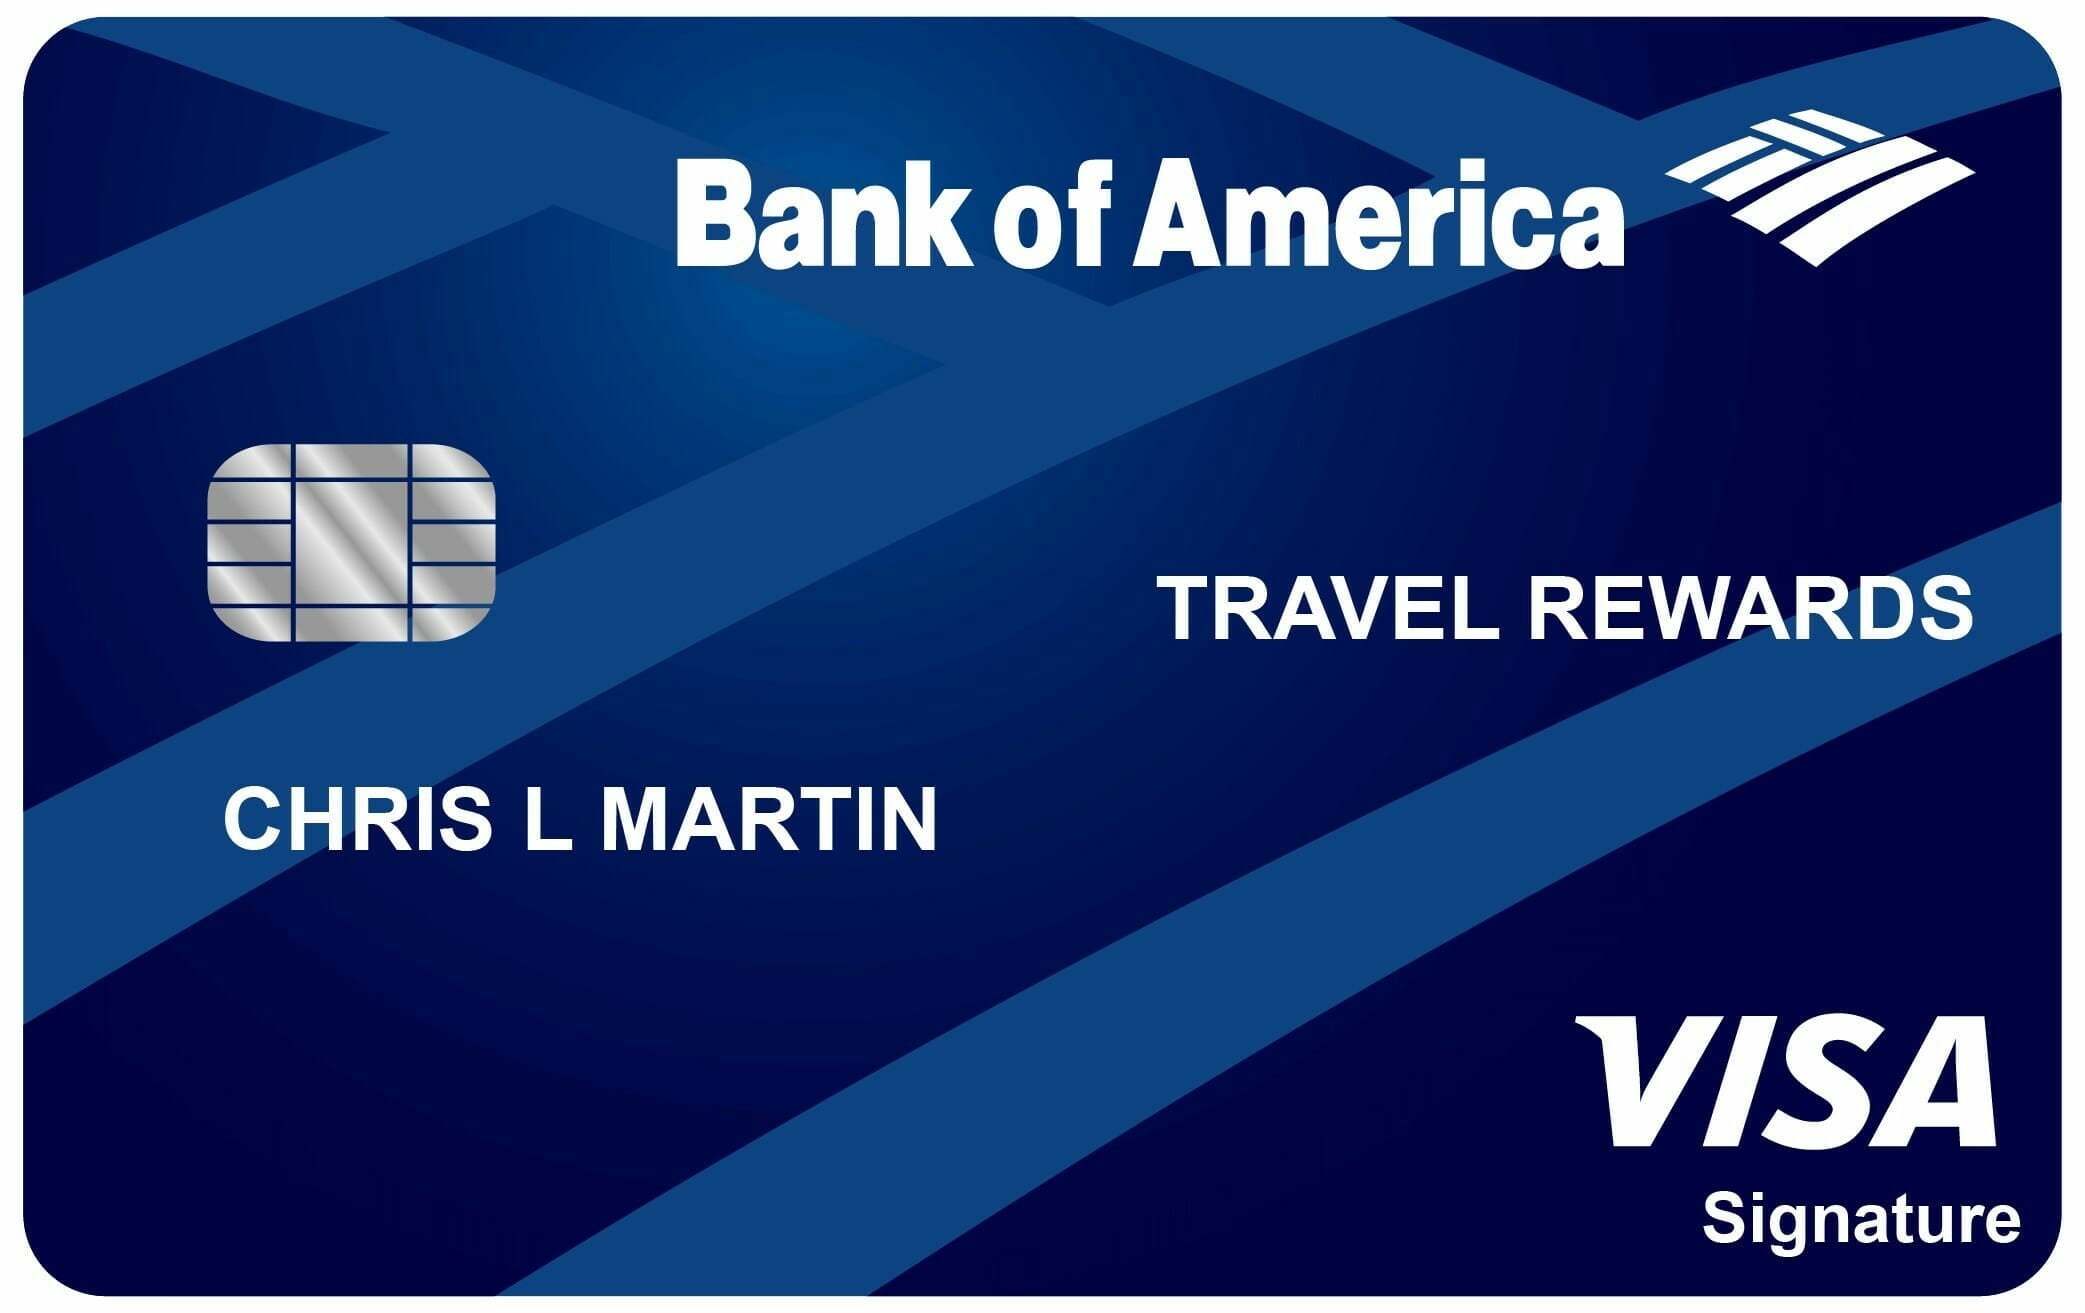 Bank of America Travel Rewards credit card